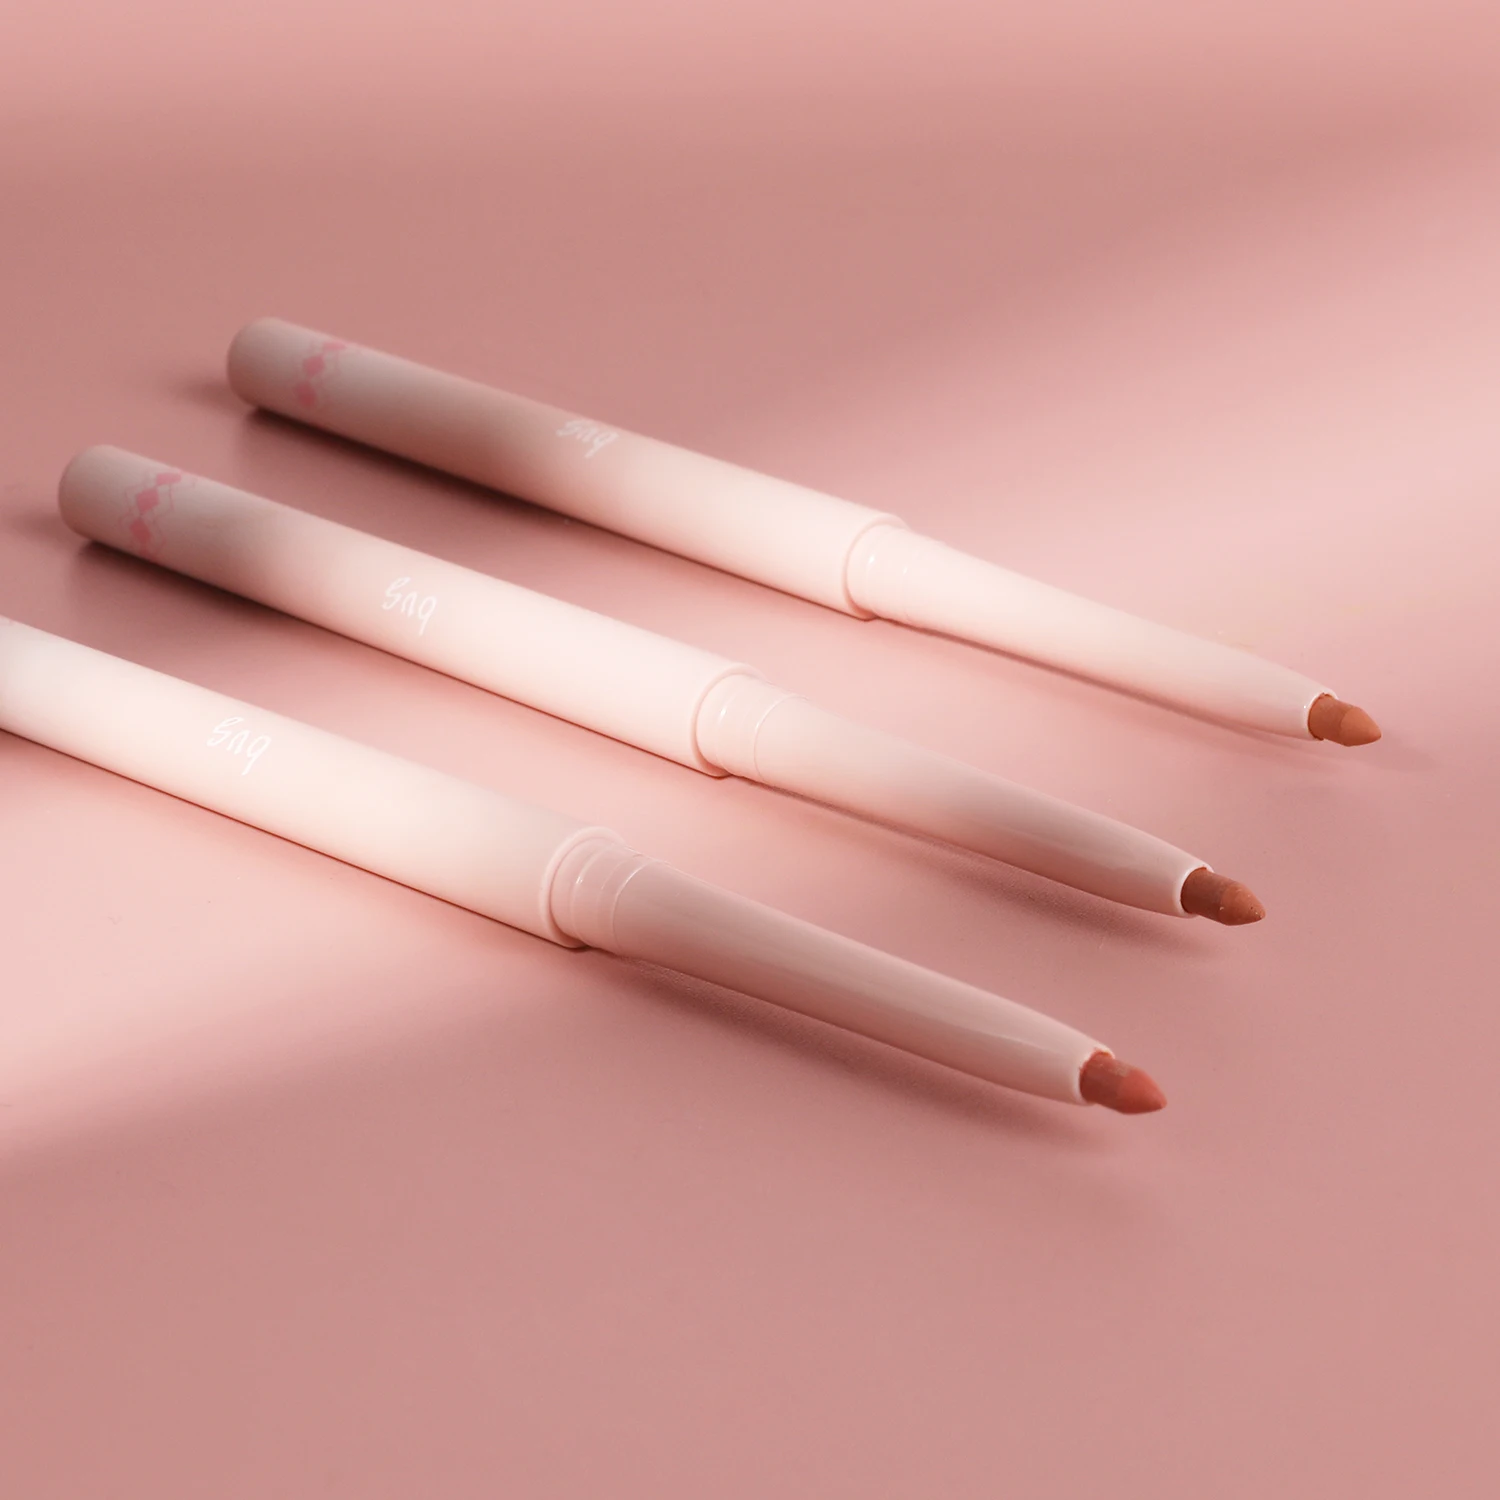 Velvet Matte Lip Liner Pencil Waterproof Lasting Lipstick Natural Outline Lips Contour Line Makeup Lipliner Pen